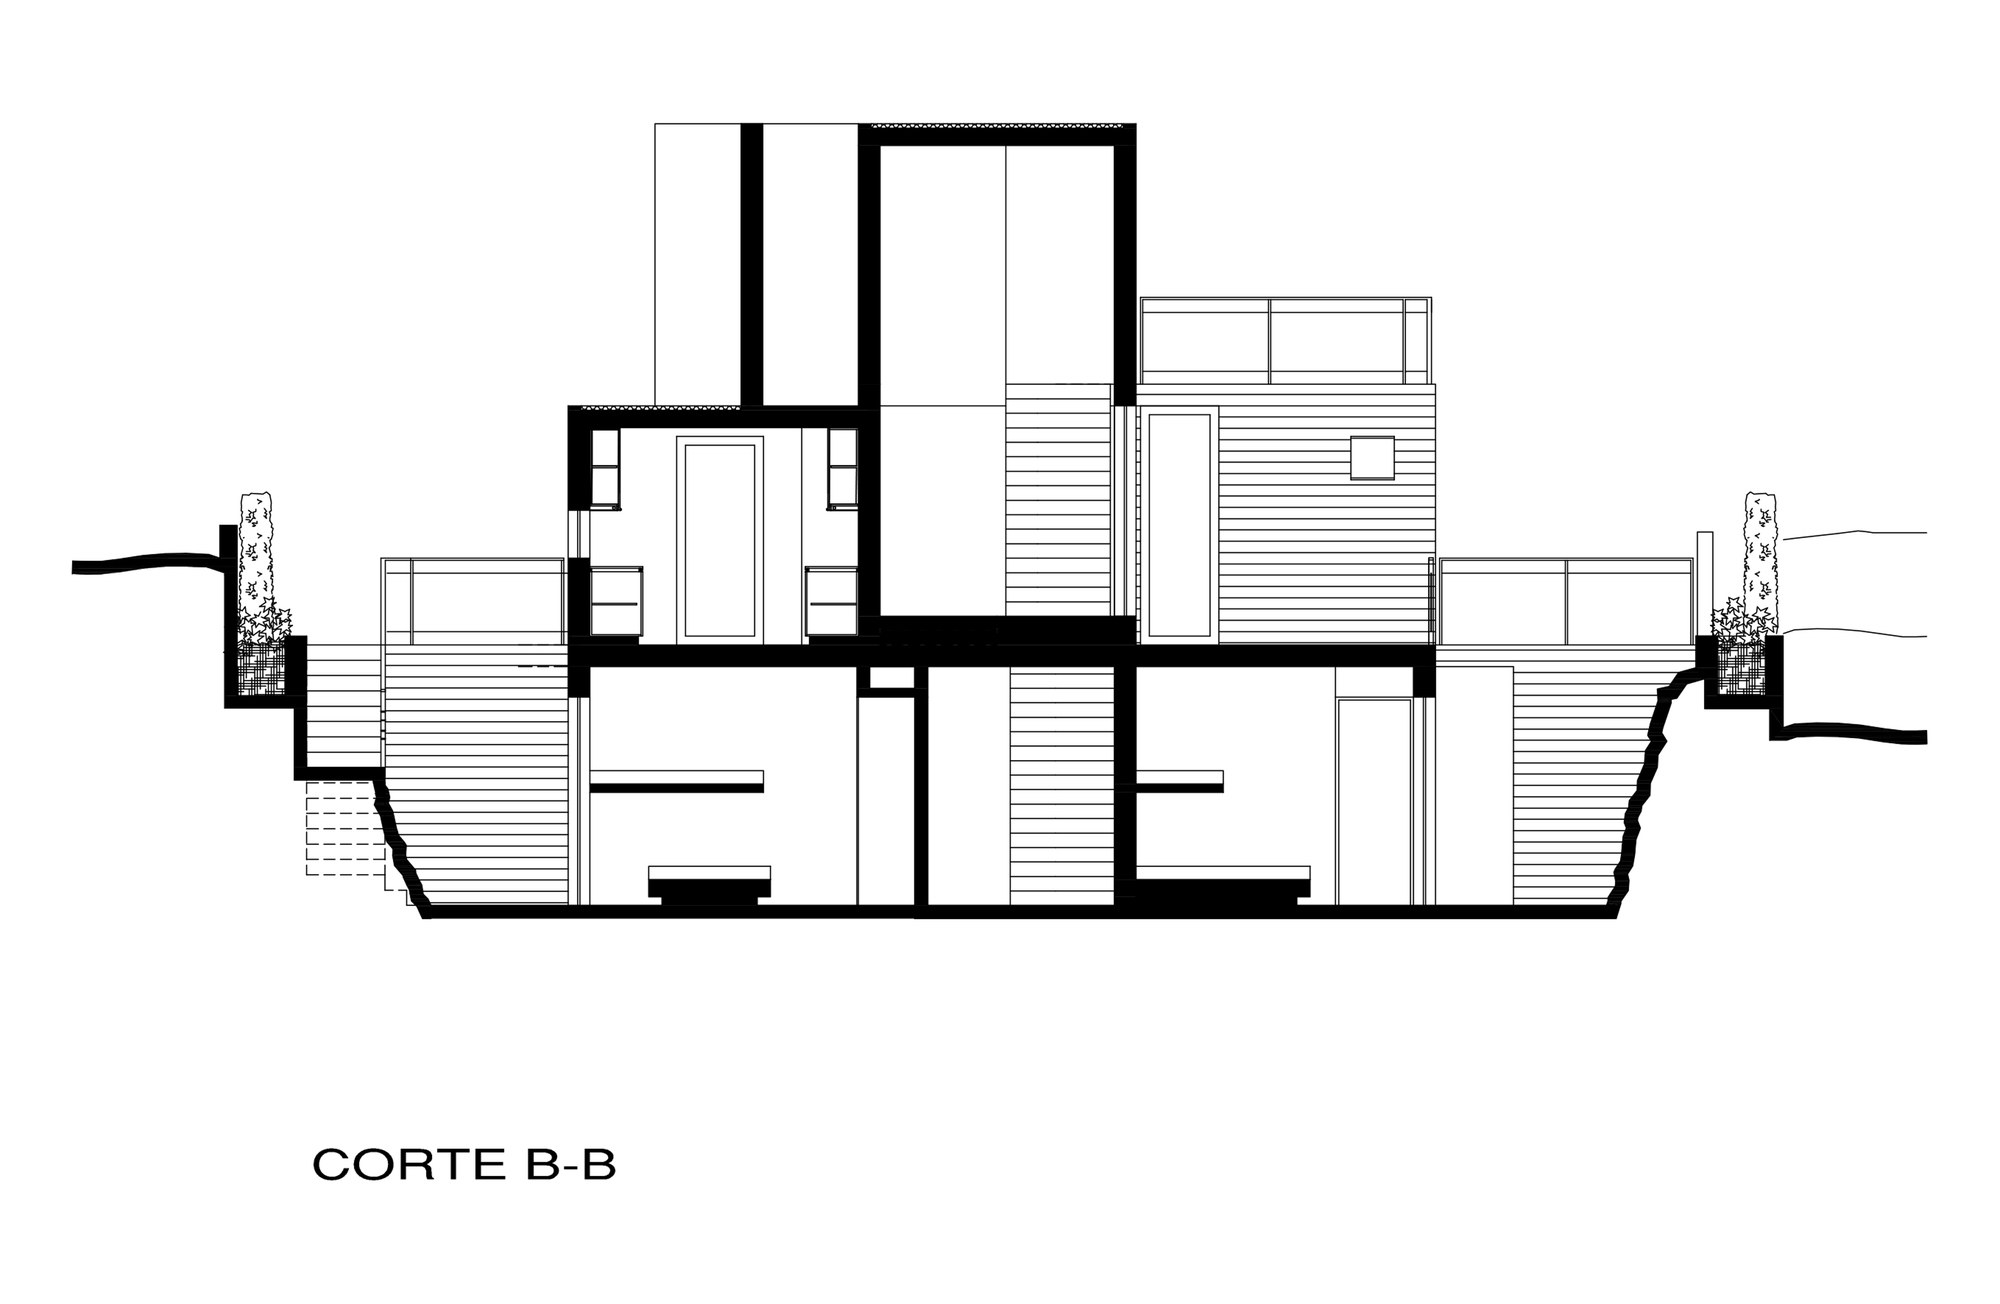 P2 House Poseidon by Domenack Arquitectos